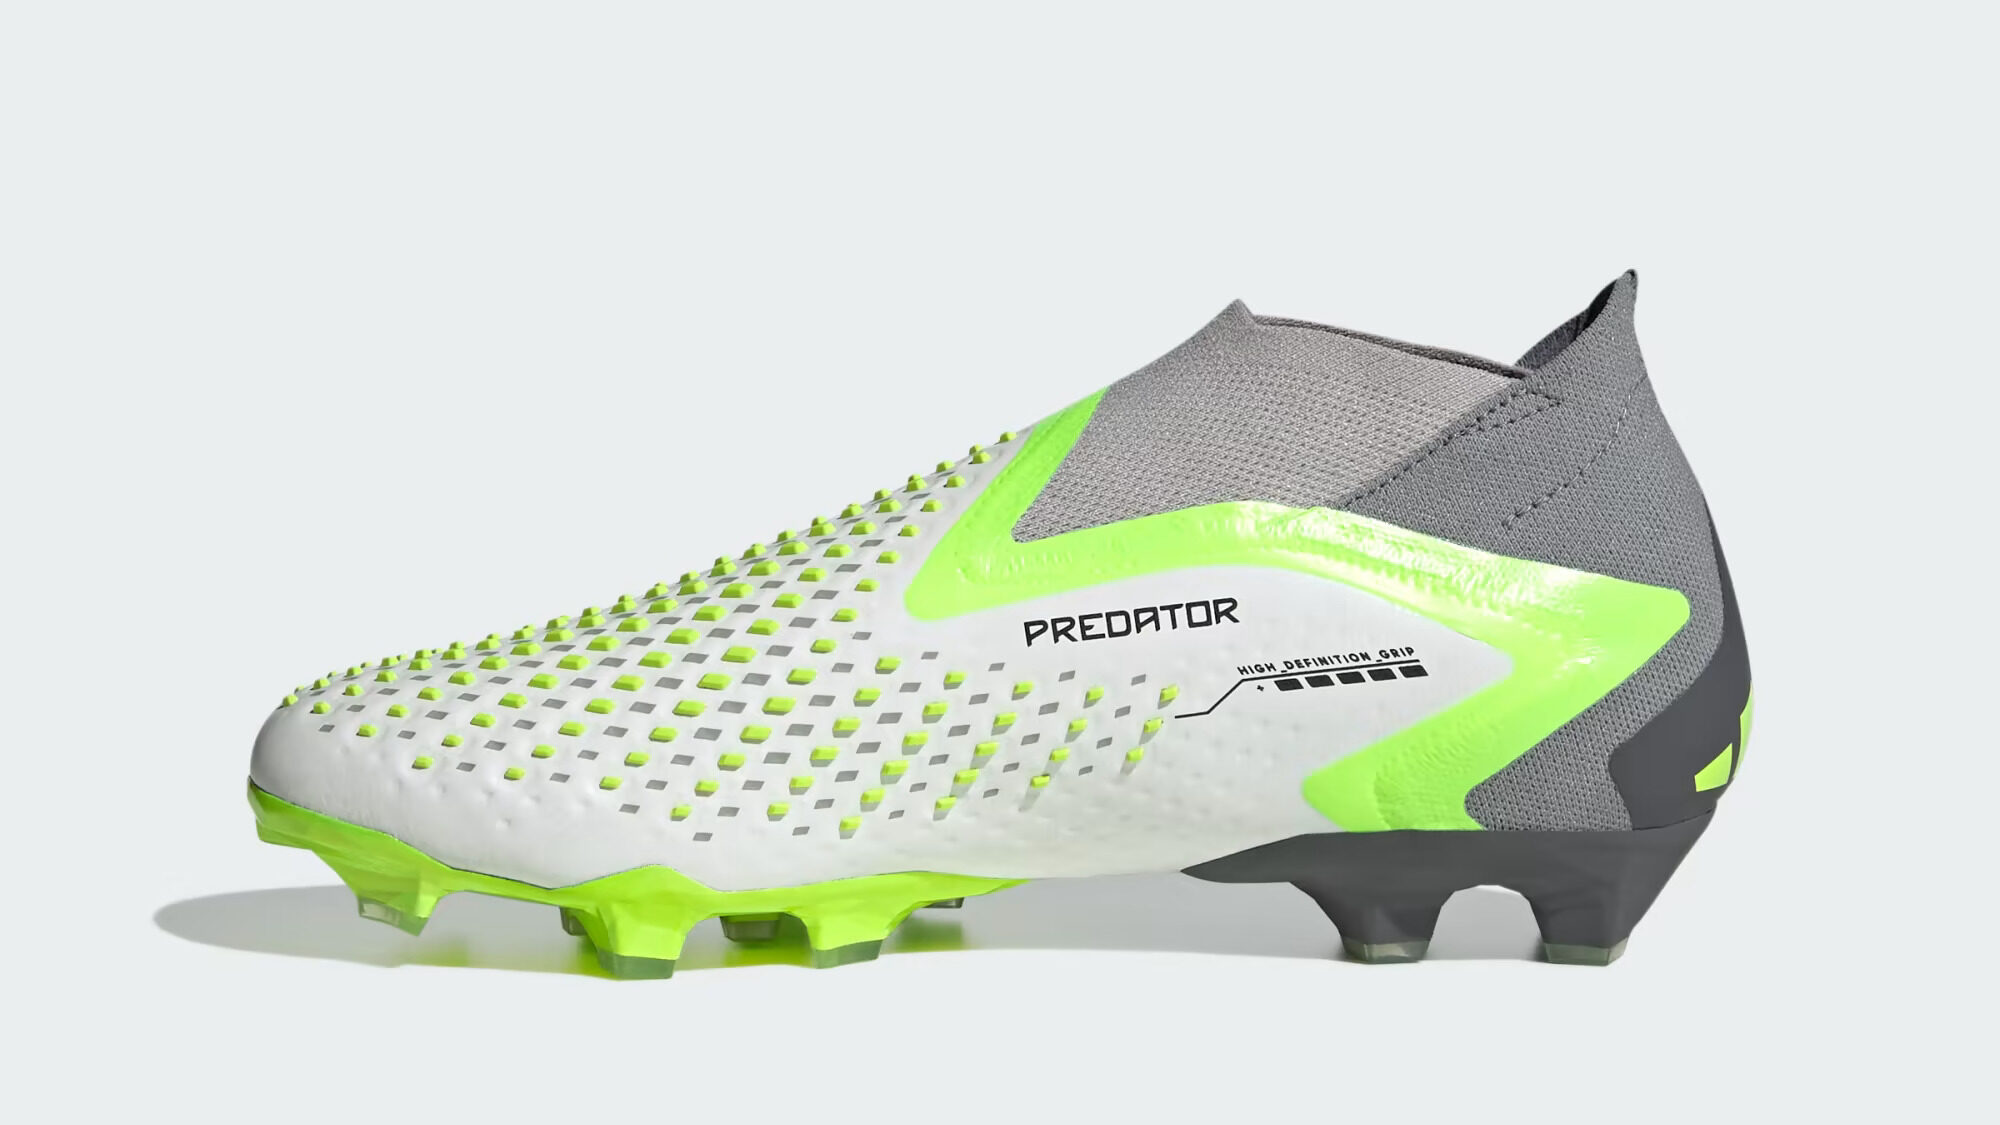 Best soccer cleats for wide feet: Adidas Predator Series